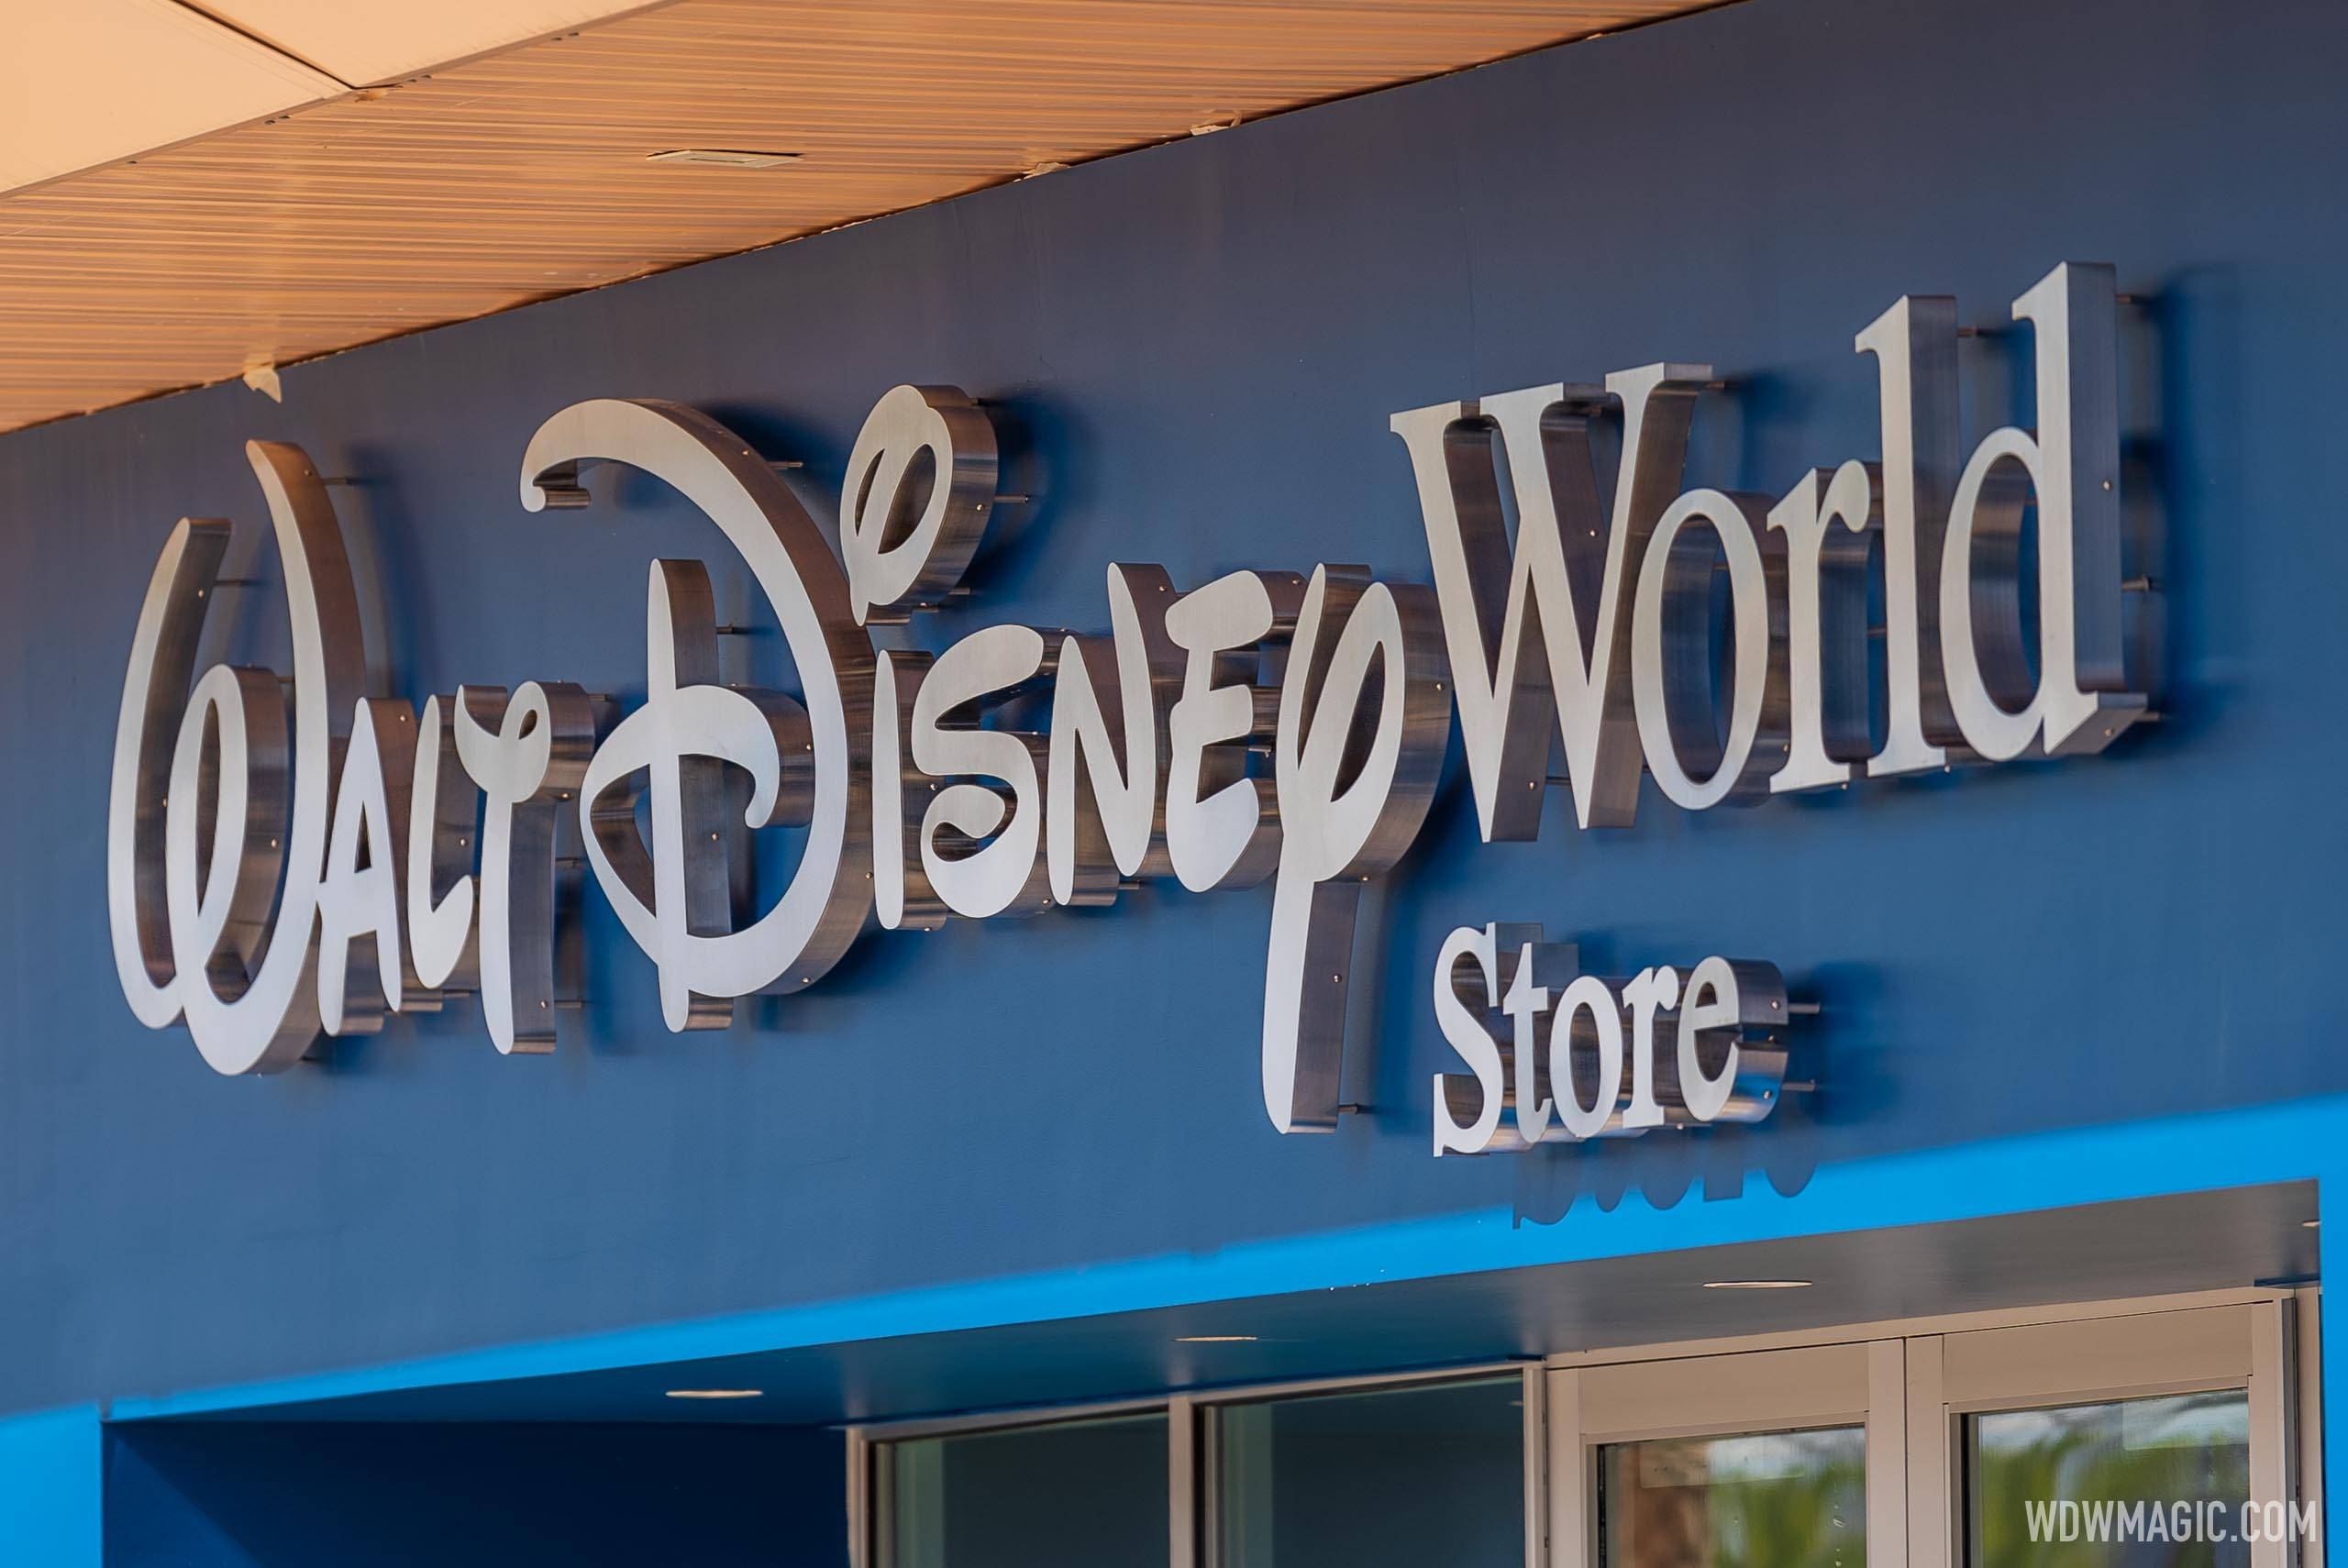 Walt Disney World Store International Drive digital display